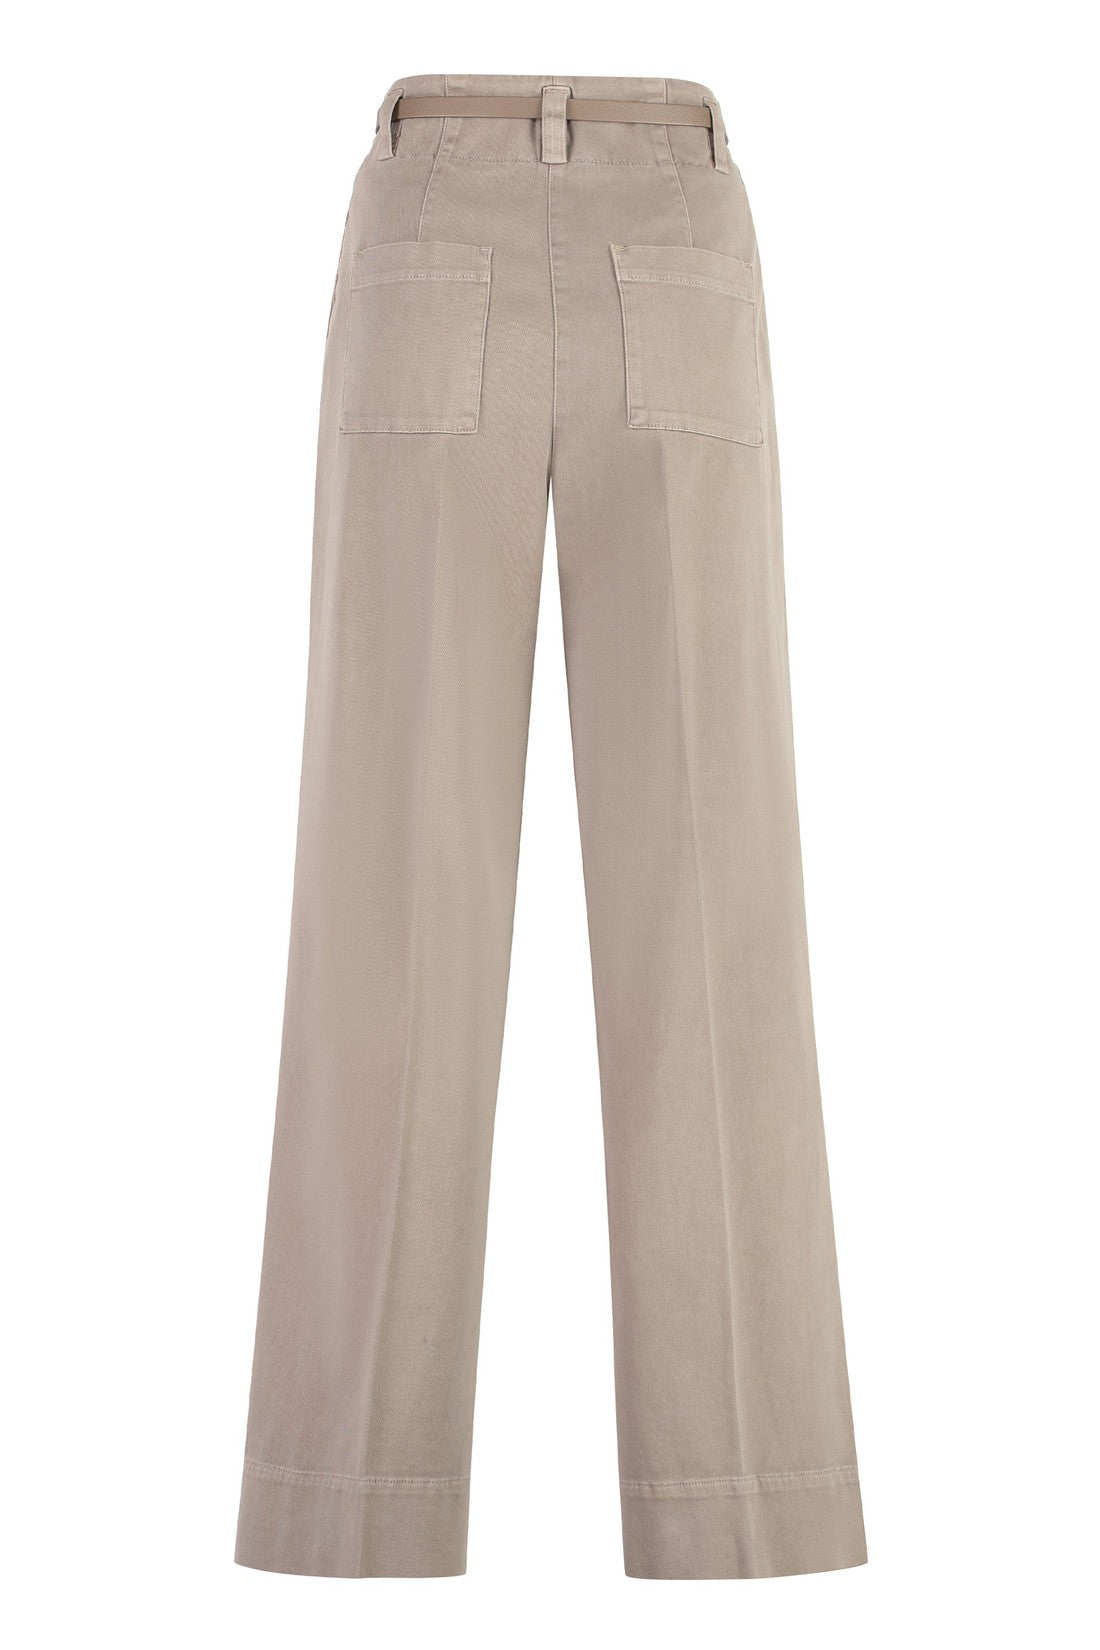 Peserico-OUTLET-SALE-Cotton gabardine trousers-ARCHIVIST